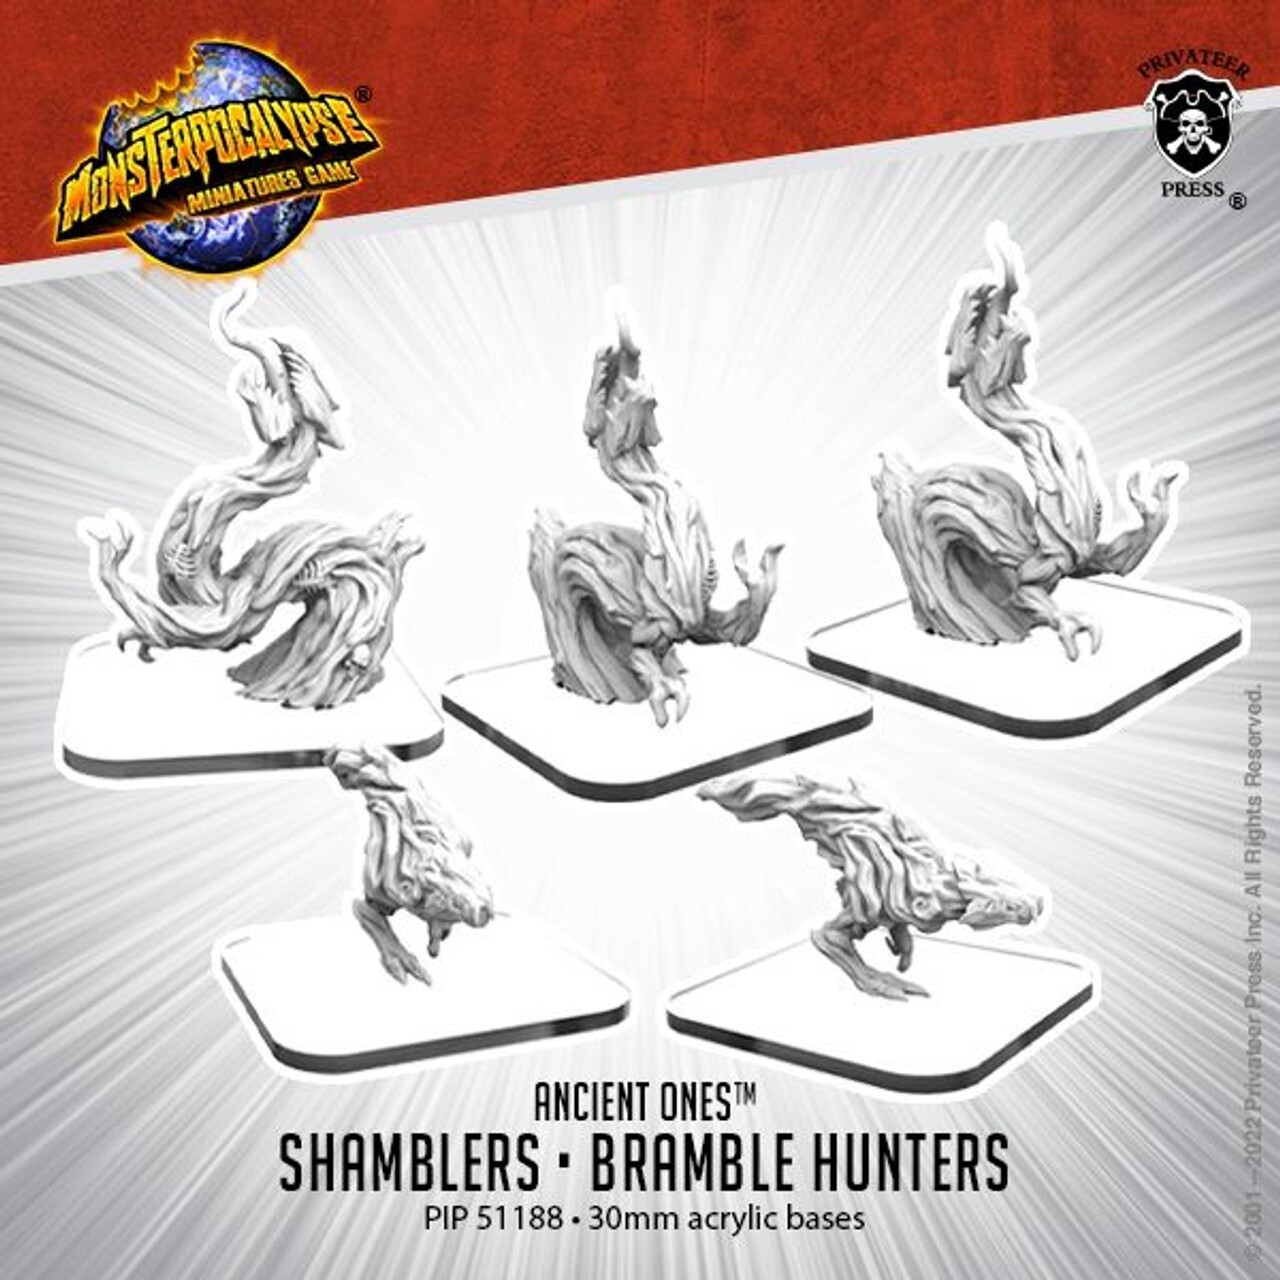 Shamblers and Bramble Hunters – Ancient Ones Units